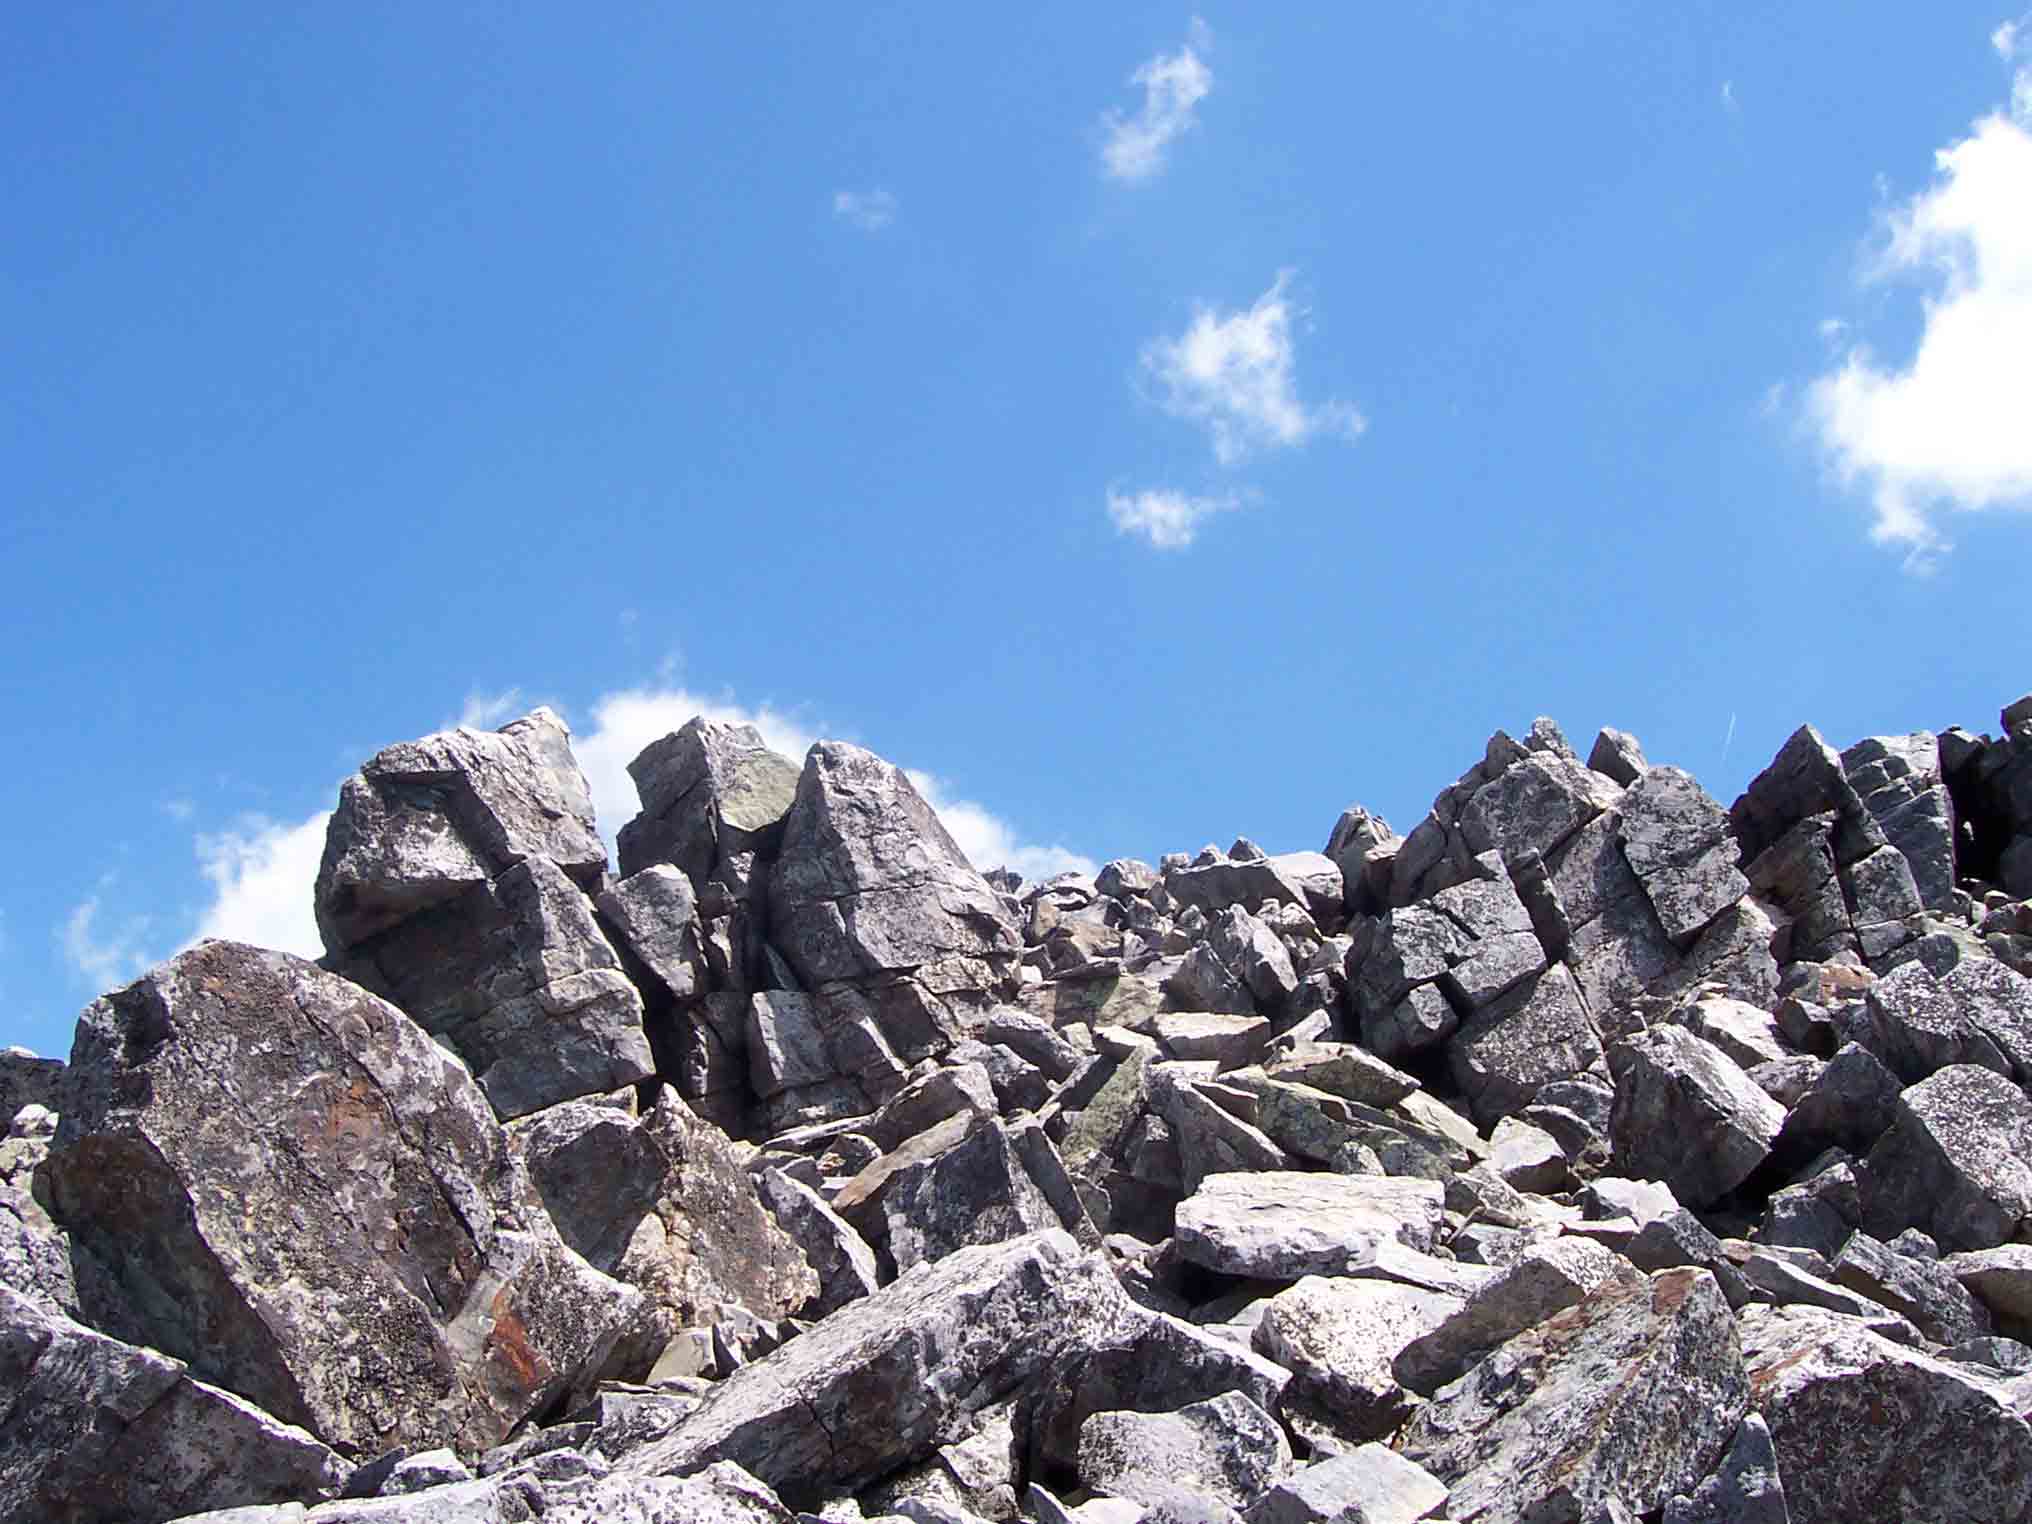 mm 2.5 - Jumble of Rocks at summit of Blackrock in Shenandoah National Park.  Courtesy dlcul@conncoll.edu